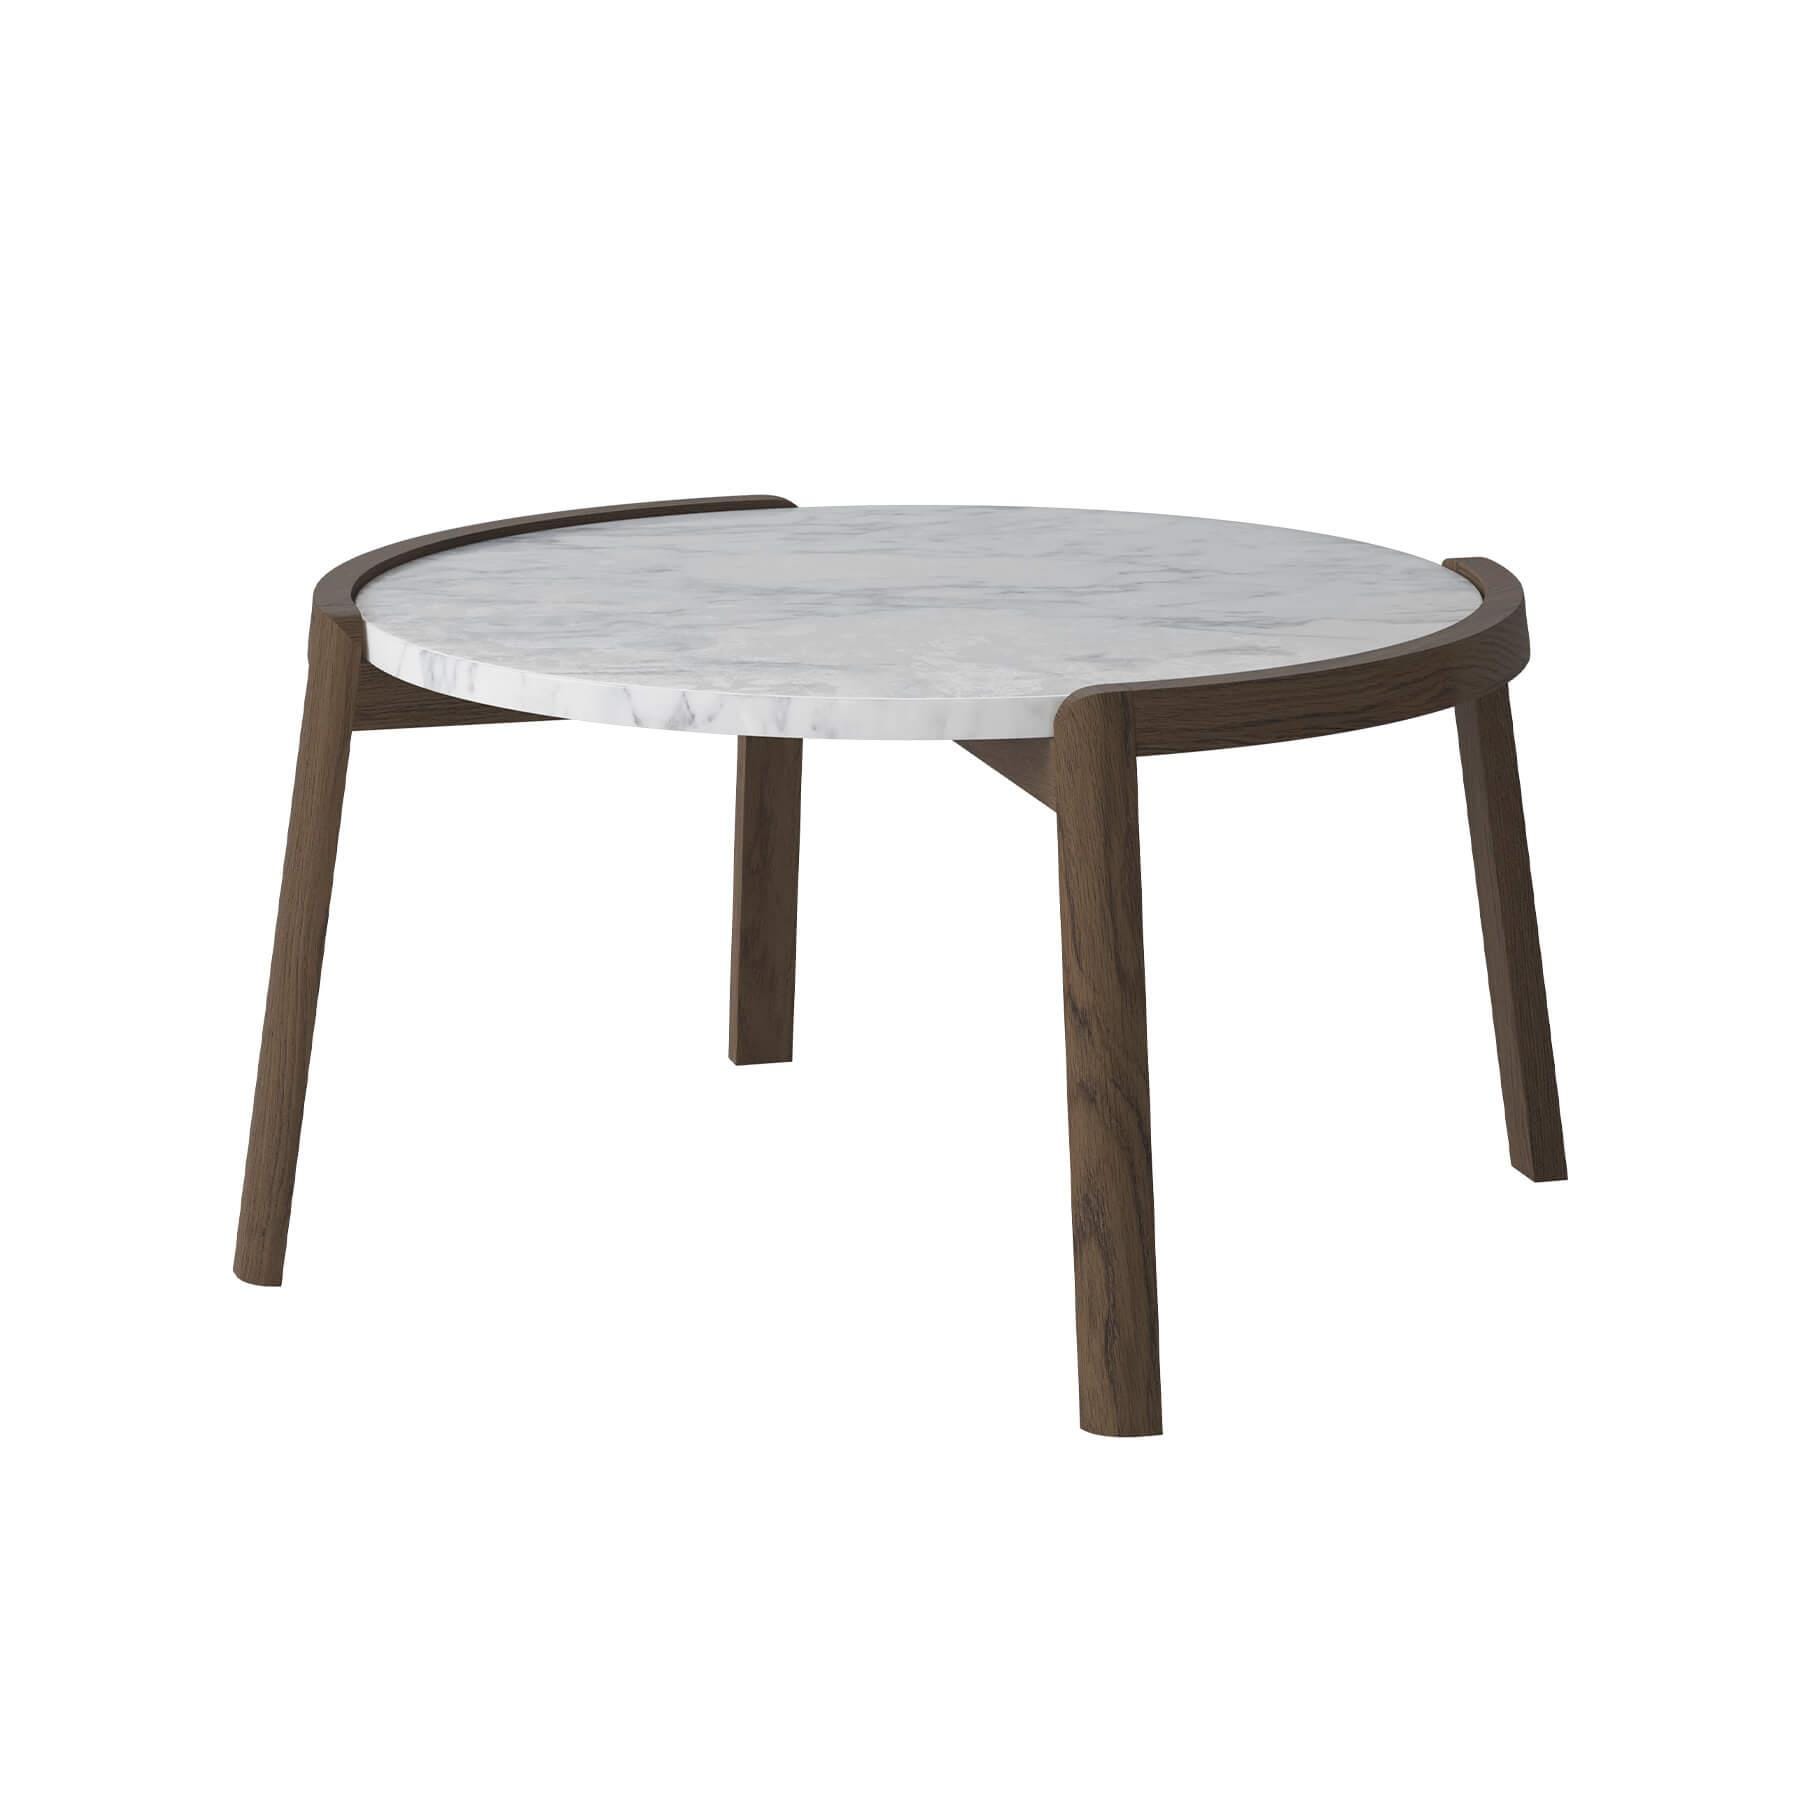 Bolia Mix Coffee Table Medium Dark Oiled Legs Grey White Marble Designer Furniture From Holloways Of Ludlow